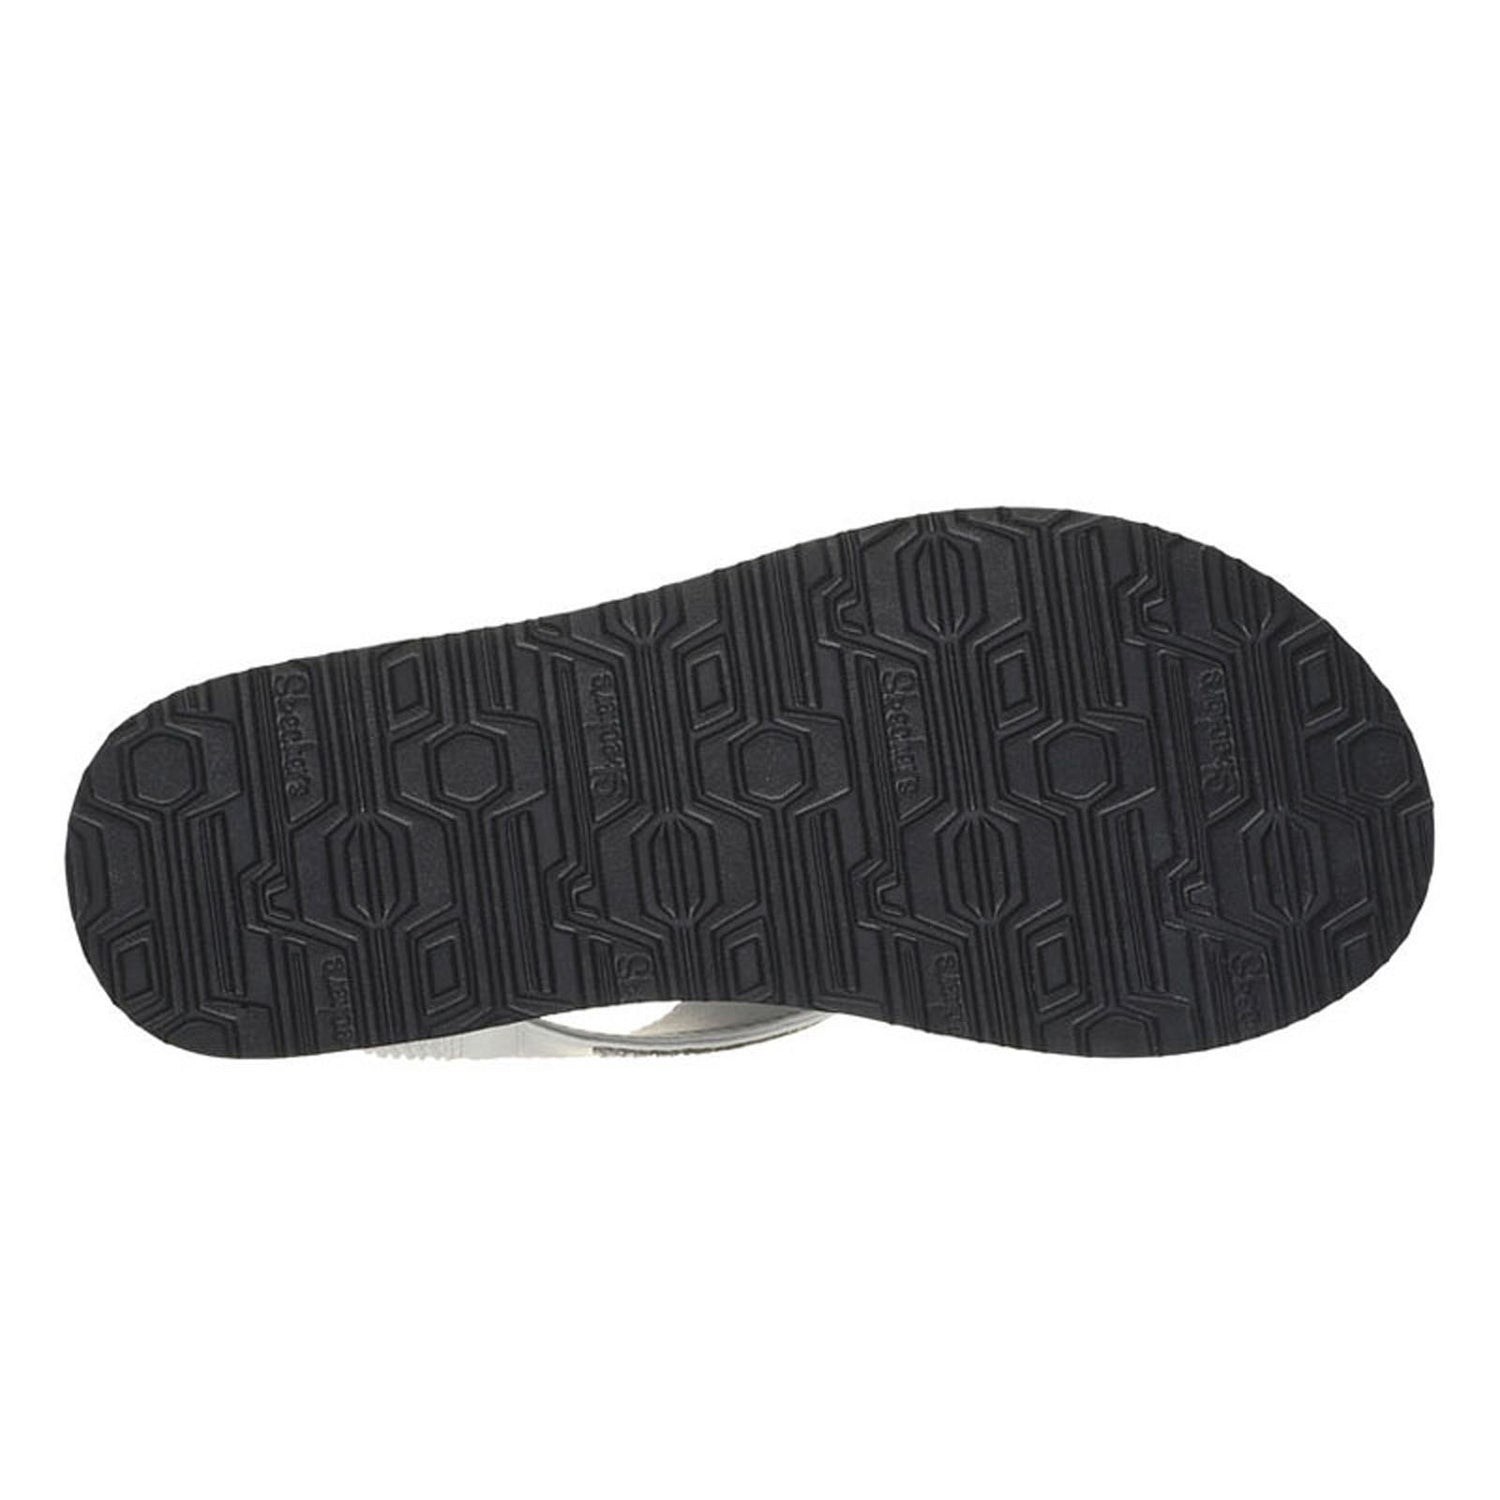 Skechers Cali Meditation Rockstar Sandal - Free Shipping